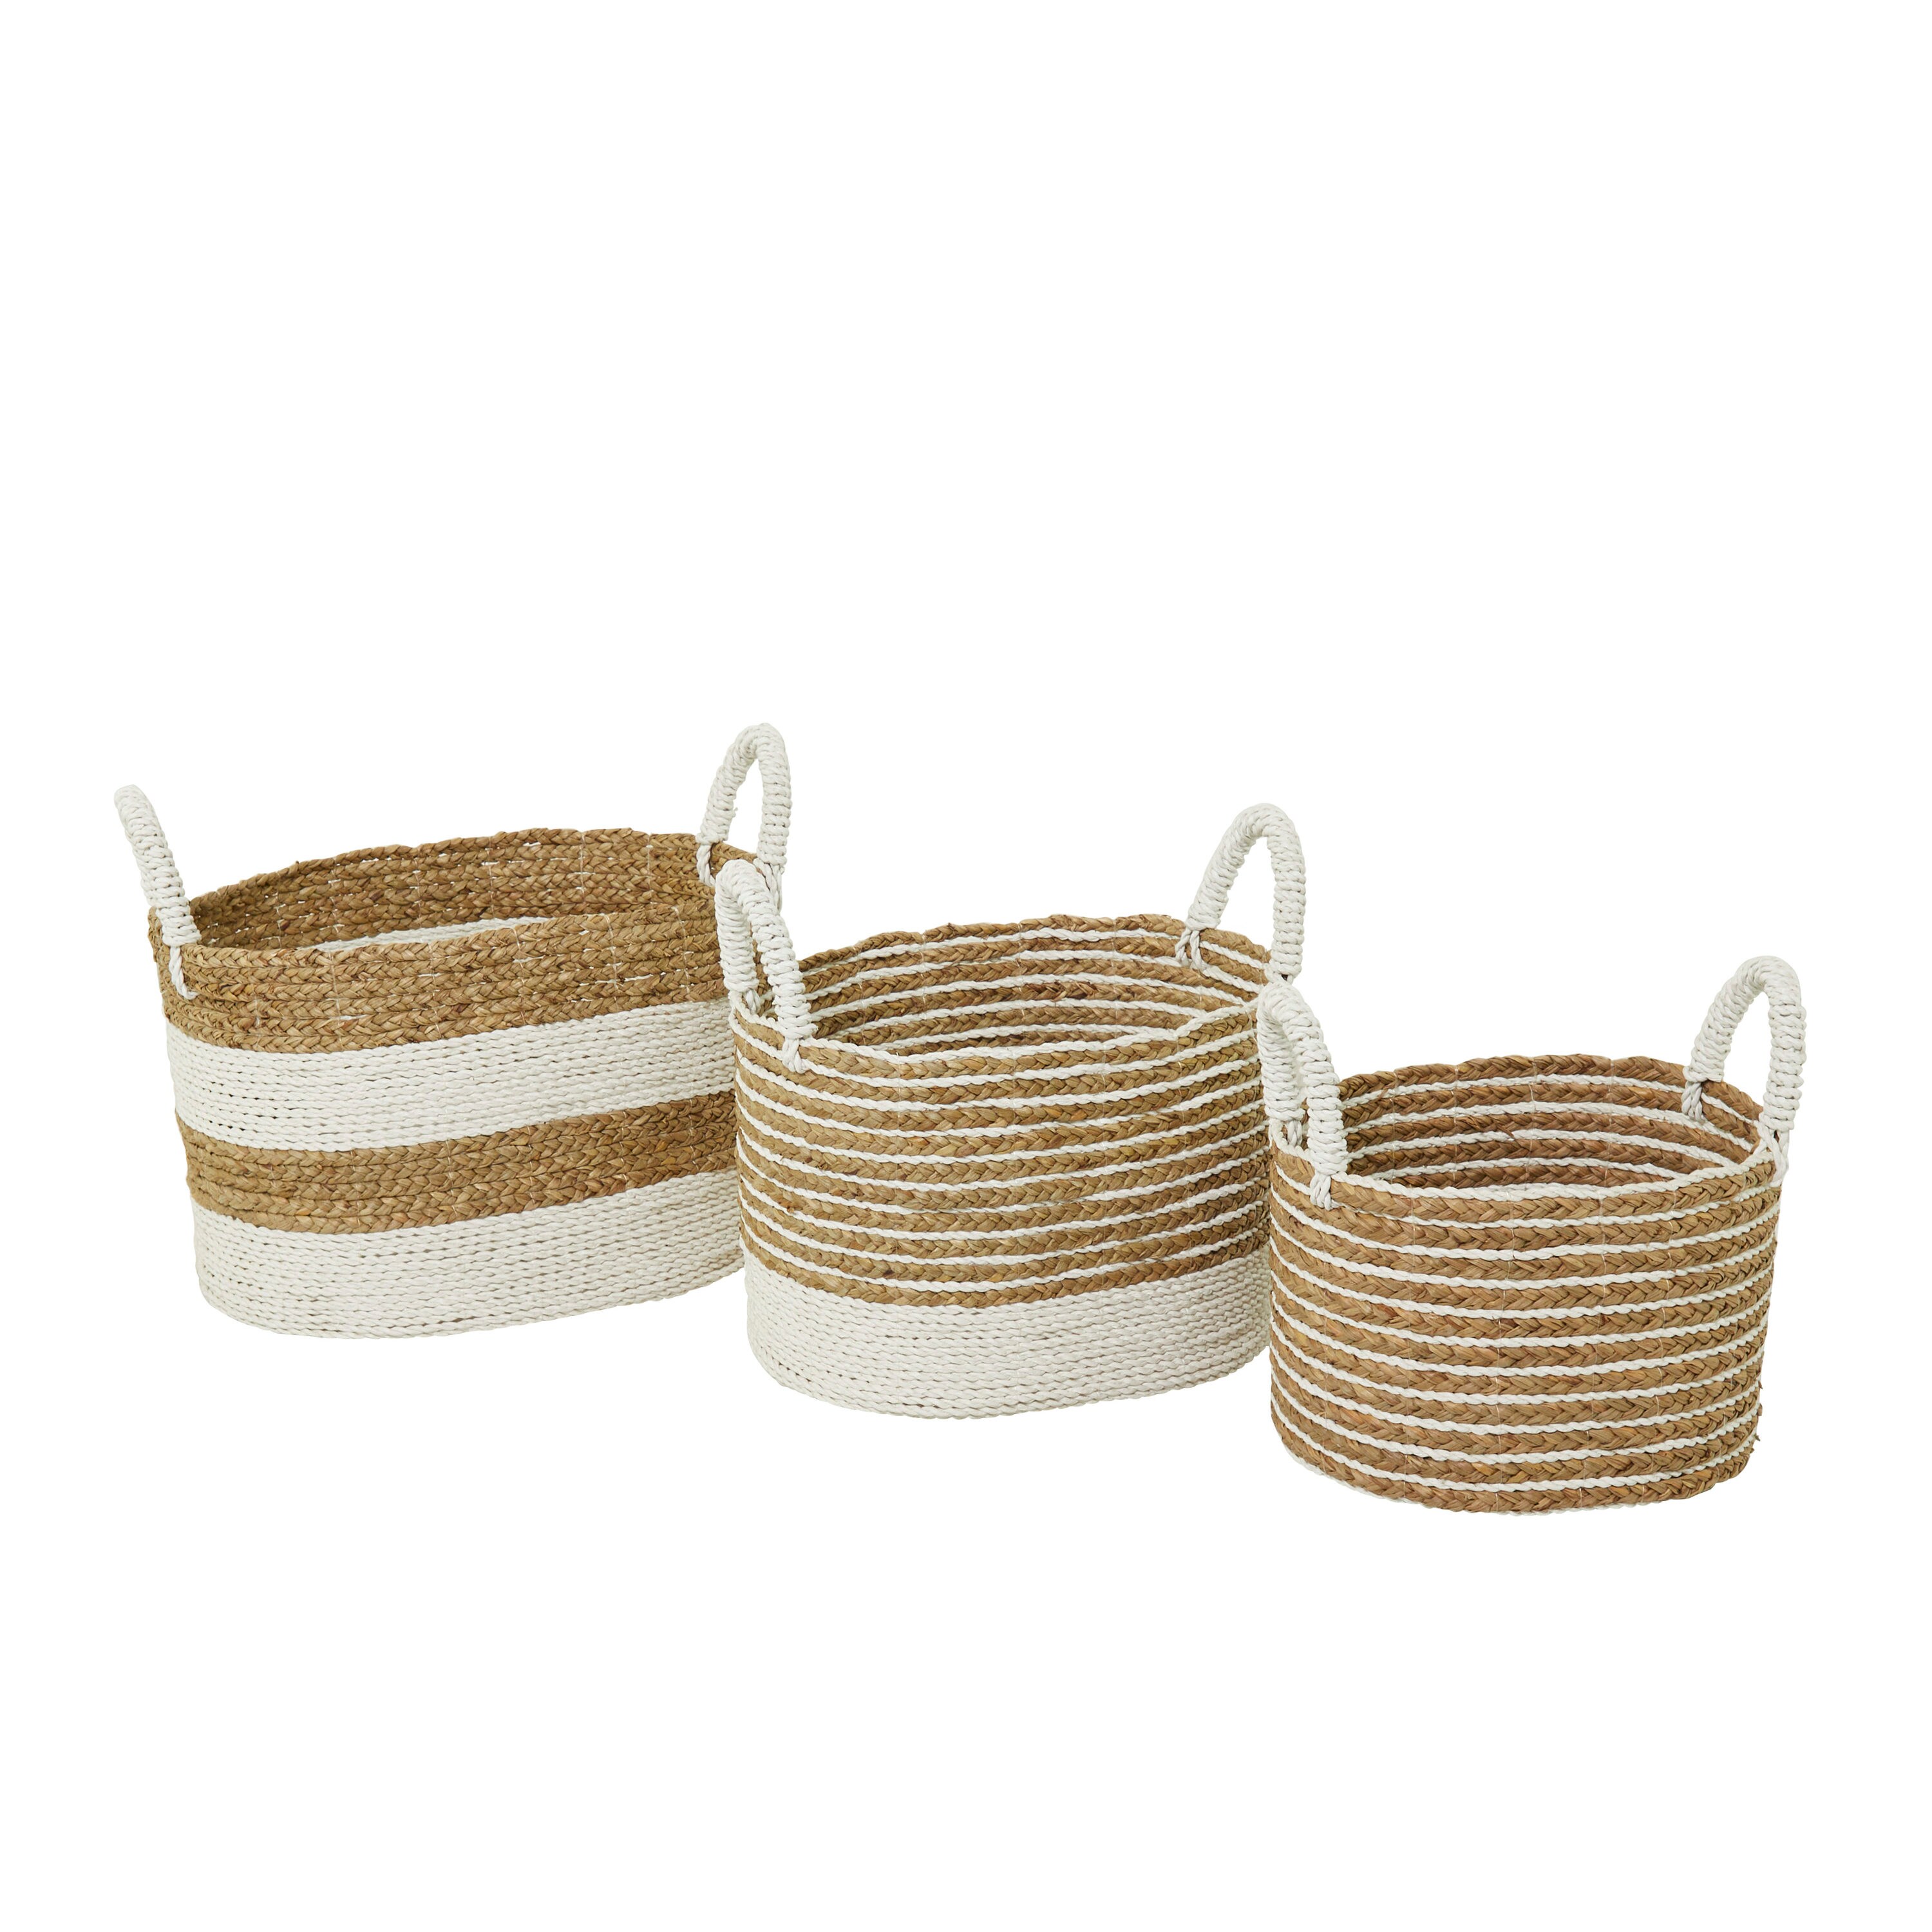 Birdrock Home Storage Shelf Baskets with Handles - Set of 3 - Abaca Seagrass Wi